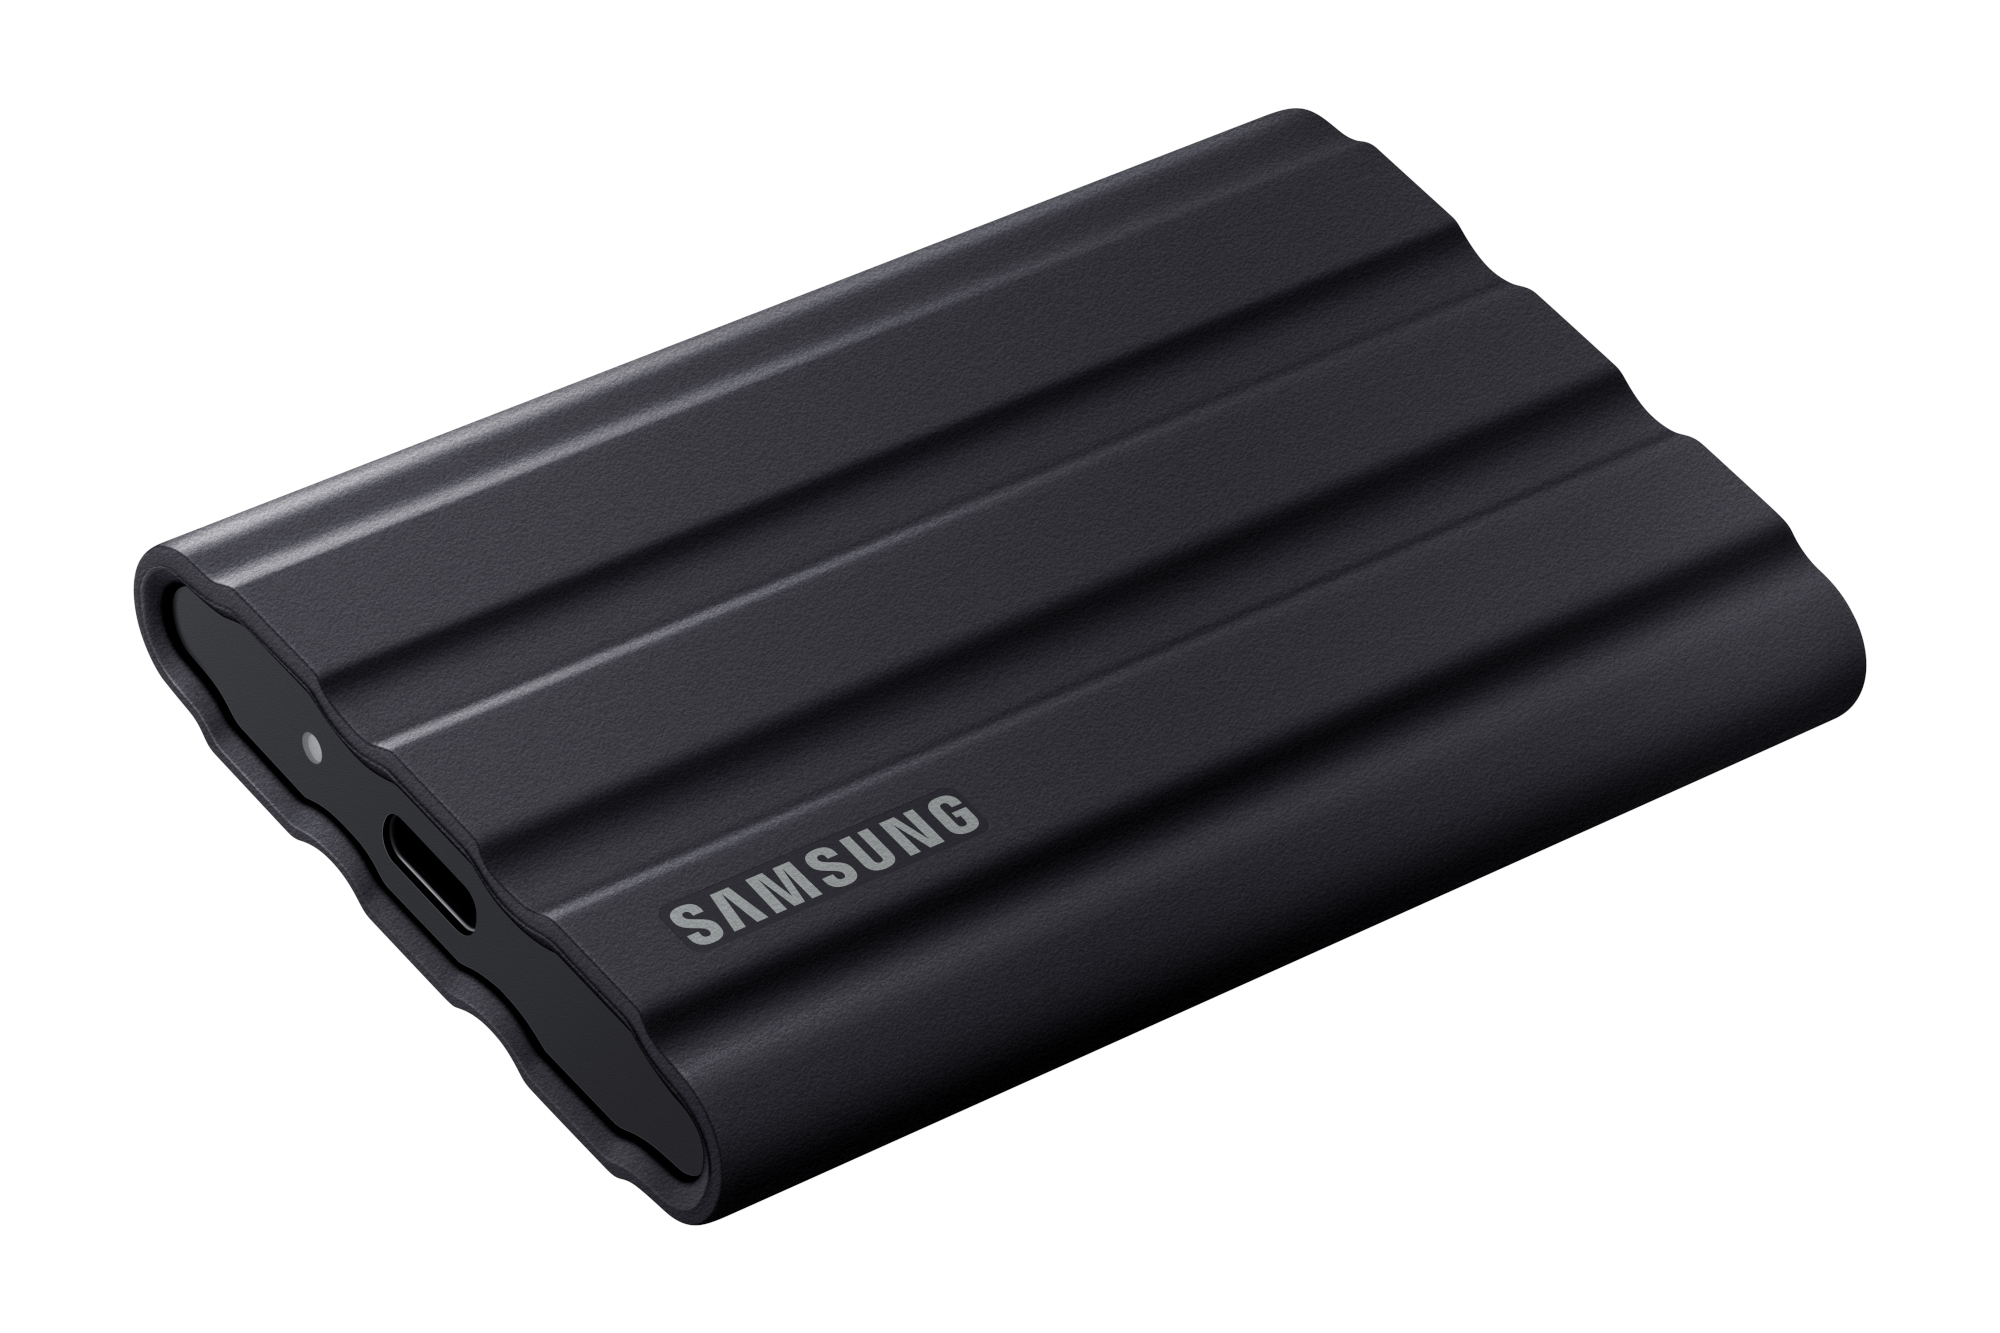 Samsung T7 Shield (4TB) - the best high-capacity alternative